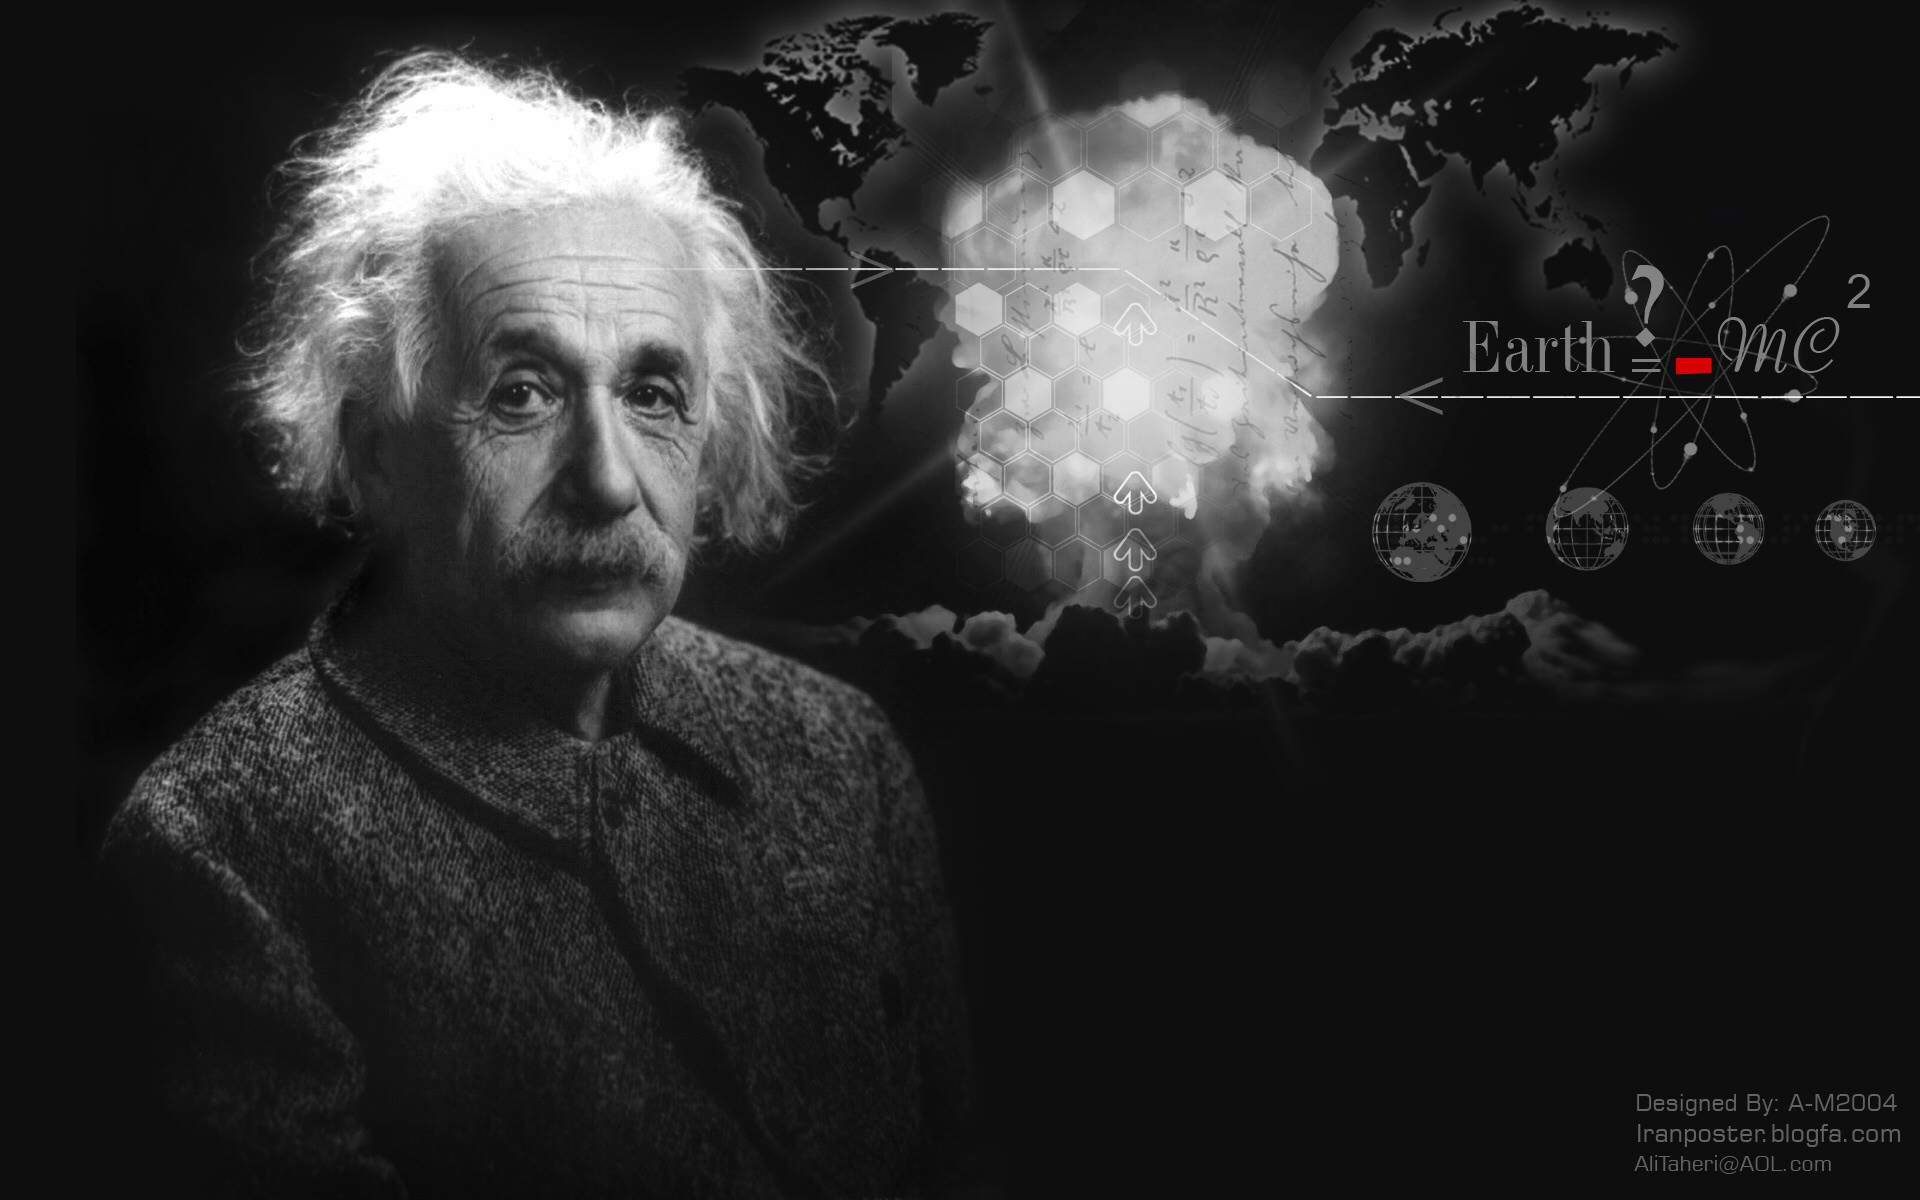 Albert Einstein Image Icons Wallpaper And Photos On